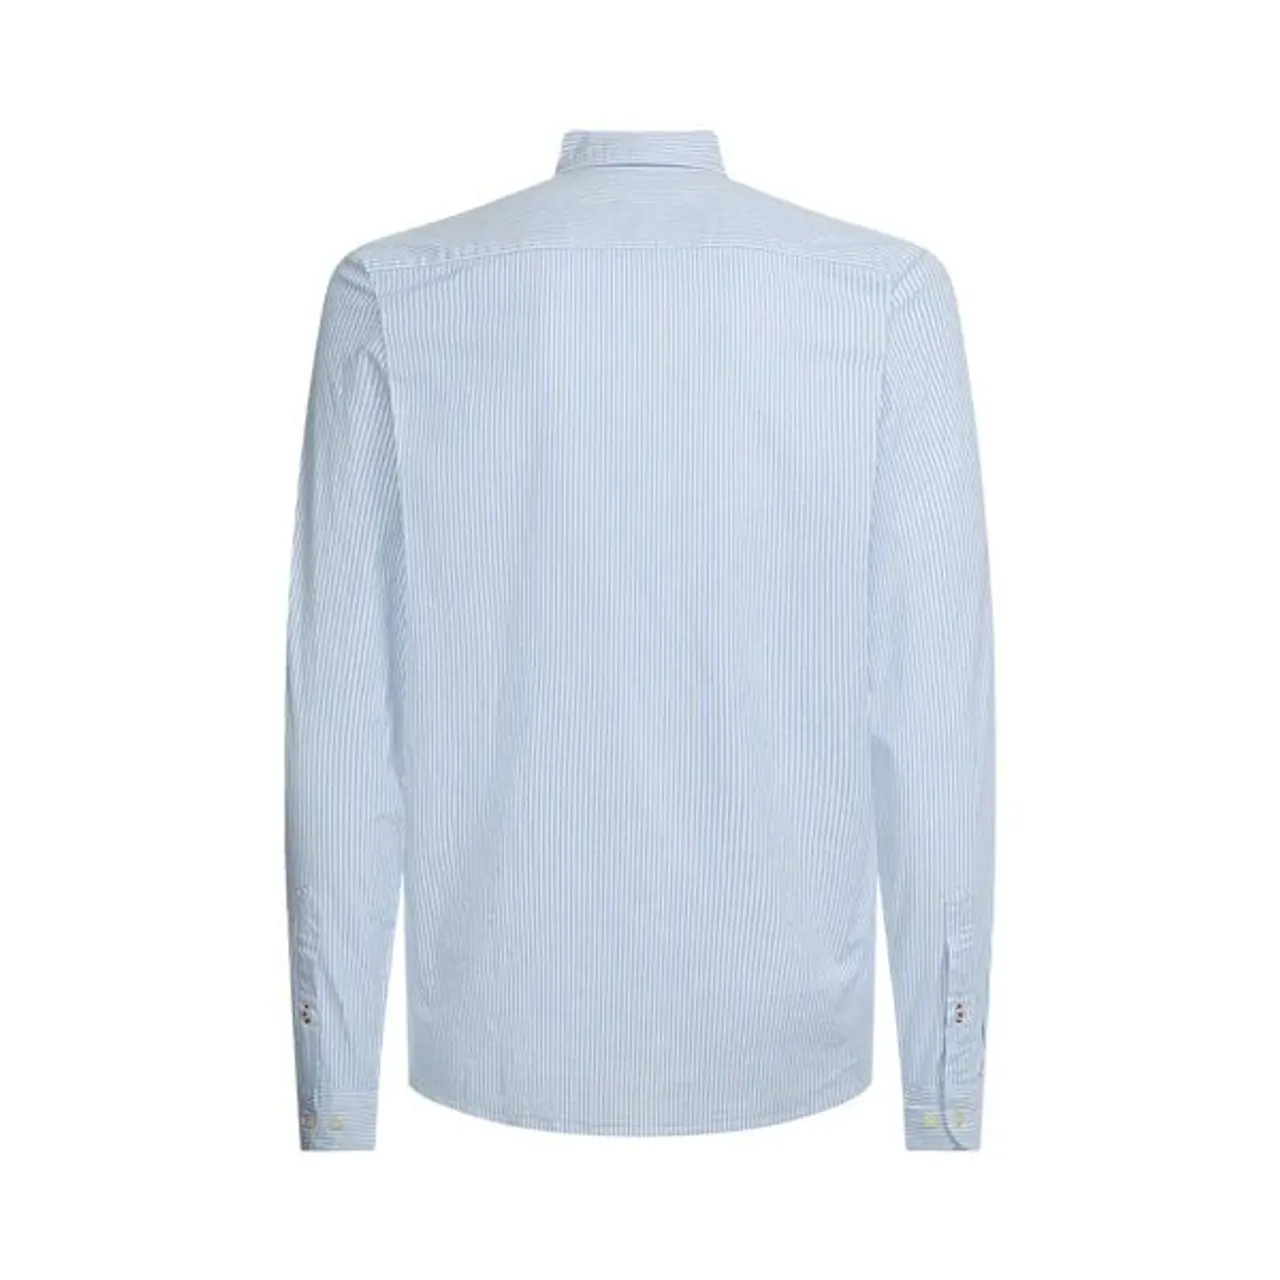 Tommy Hilfiger 1985 Striped Oxford Shirt, Copen Blue/White - Copen Blue/White - Male